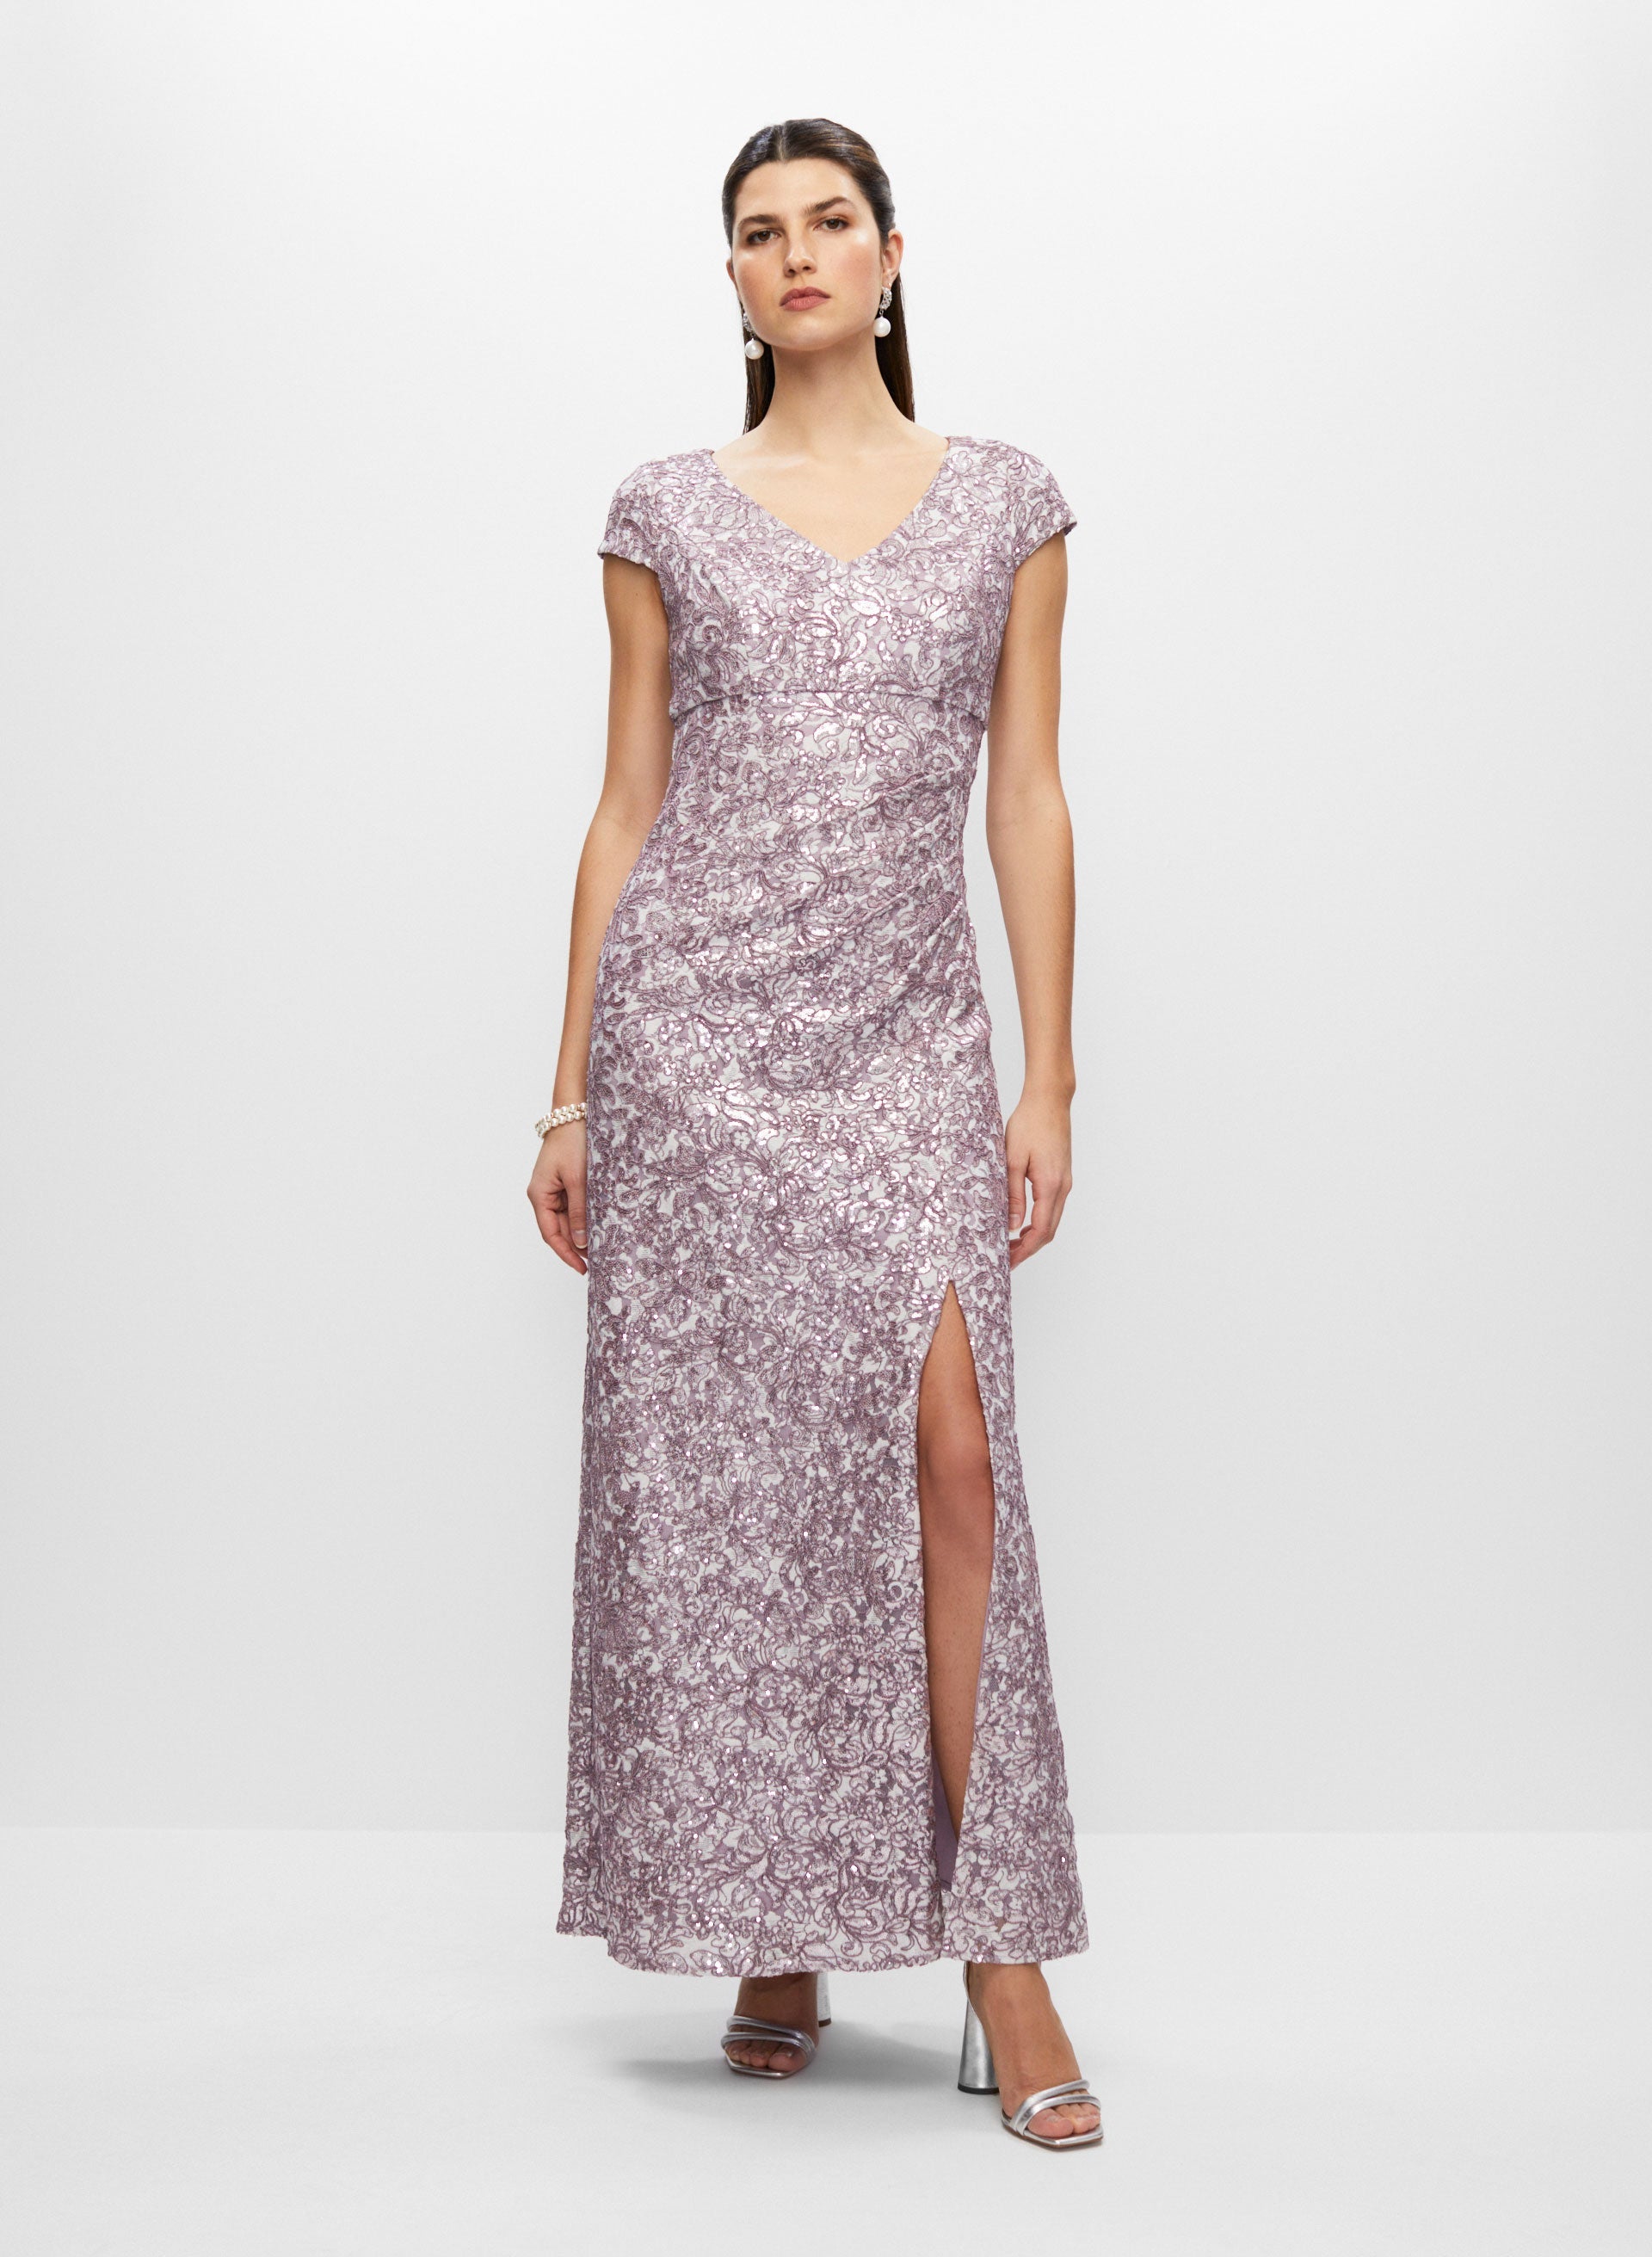 Melanie Lyne 2 Pcs Sequin Gown Open Back Party Wedding Dress Size 6 NWT  $395